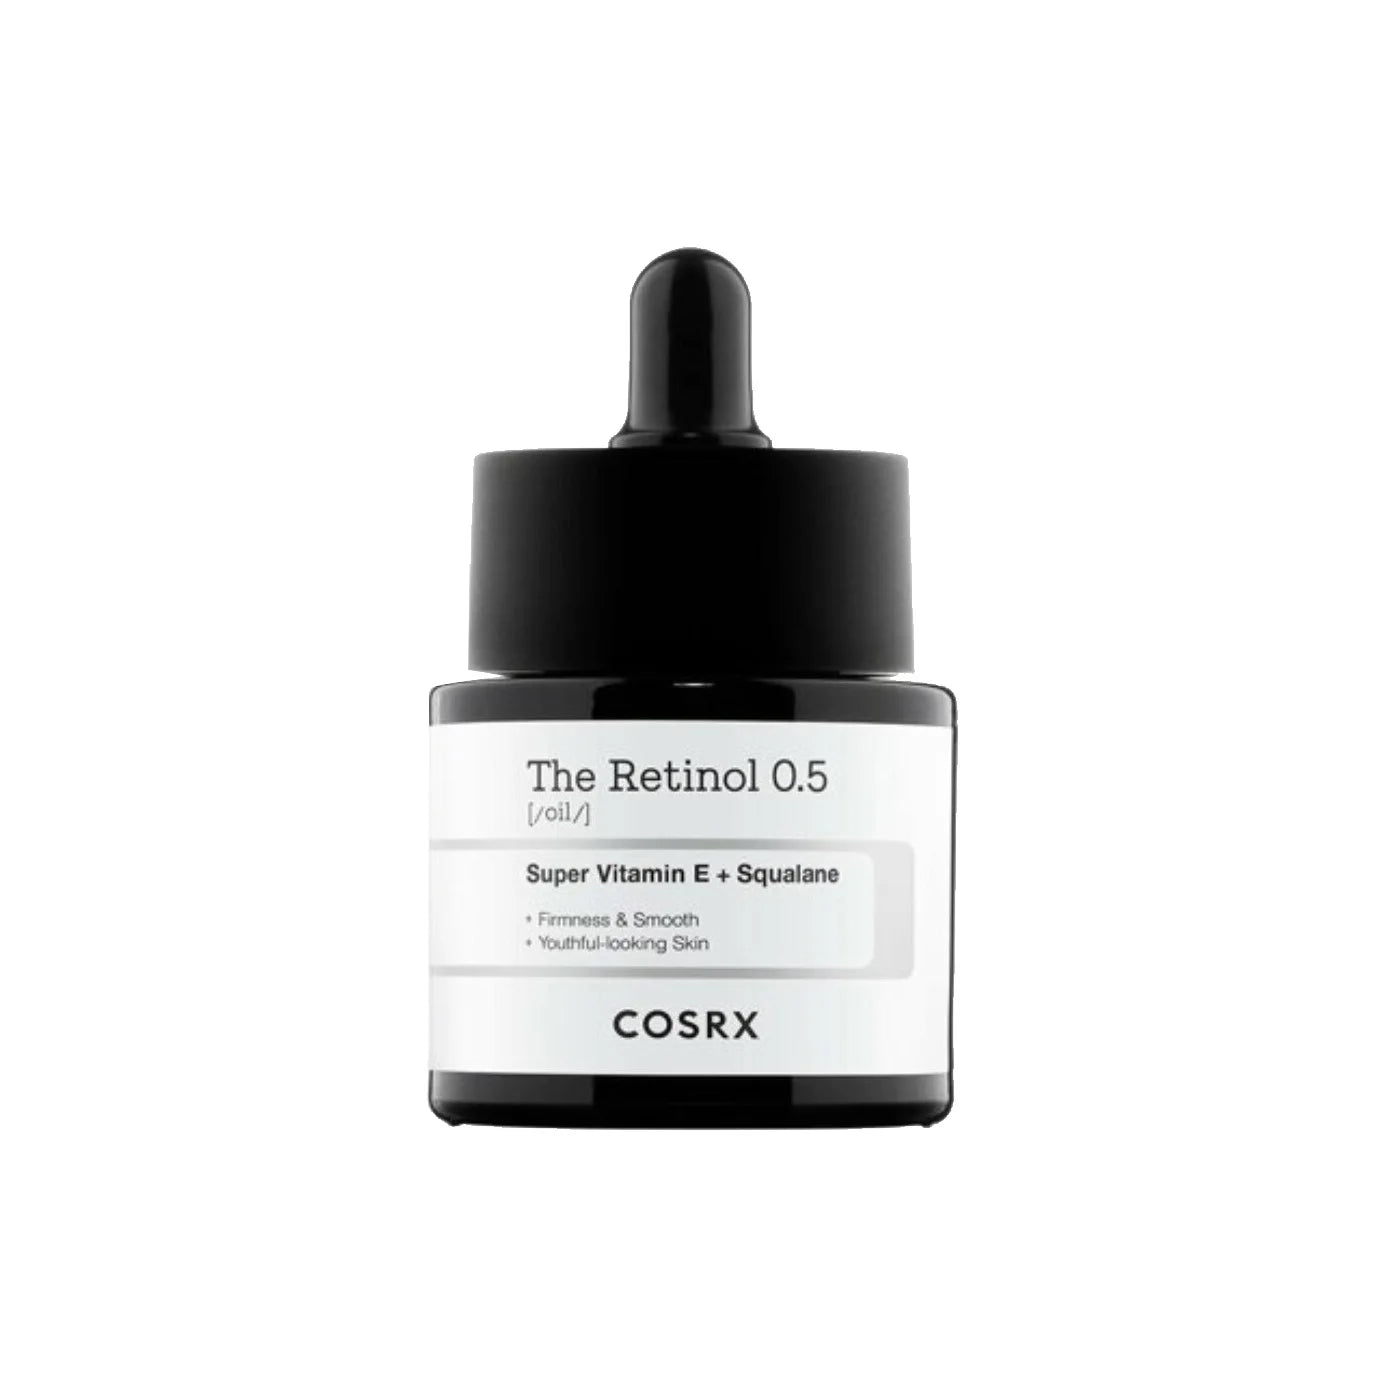 Cosrx The Retinol 0.5 Oil anti-aging wrinkles fine lines Korean skincare face oil moisturizer rough texture K Beauty World